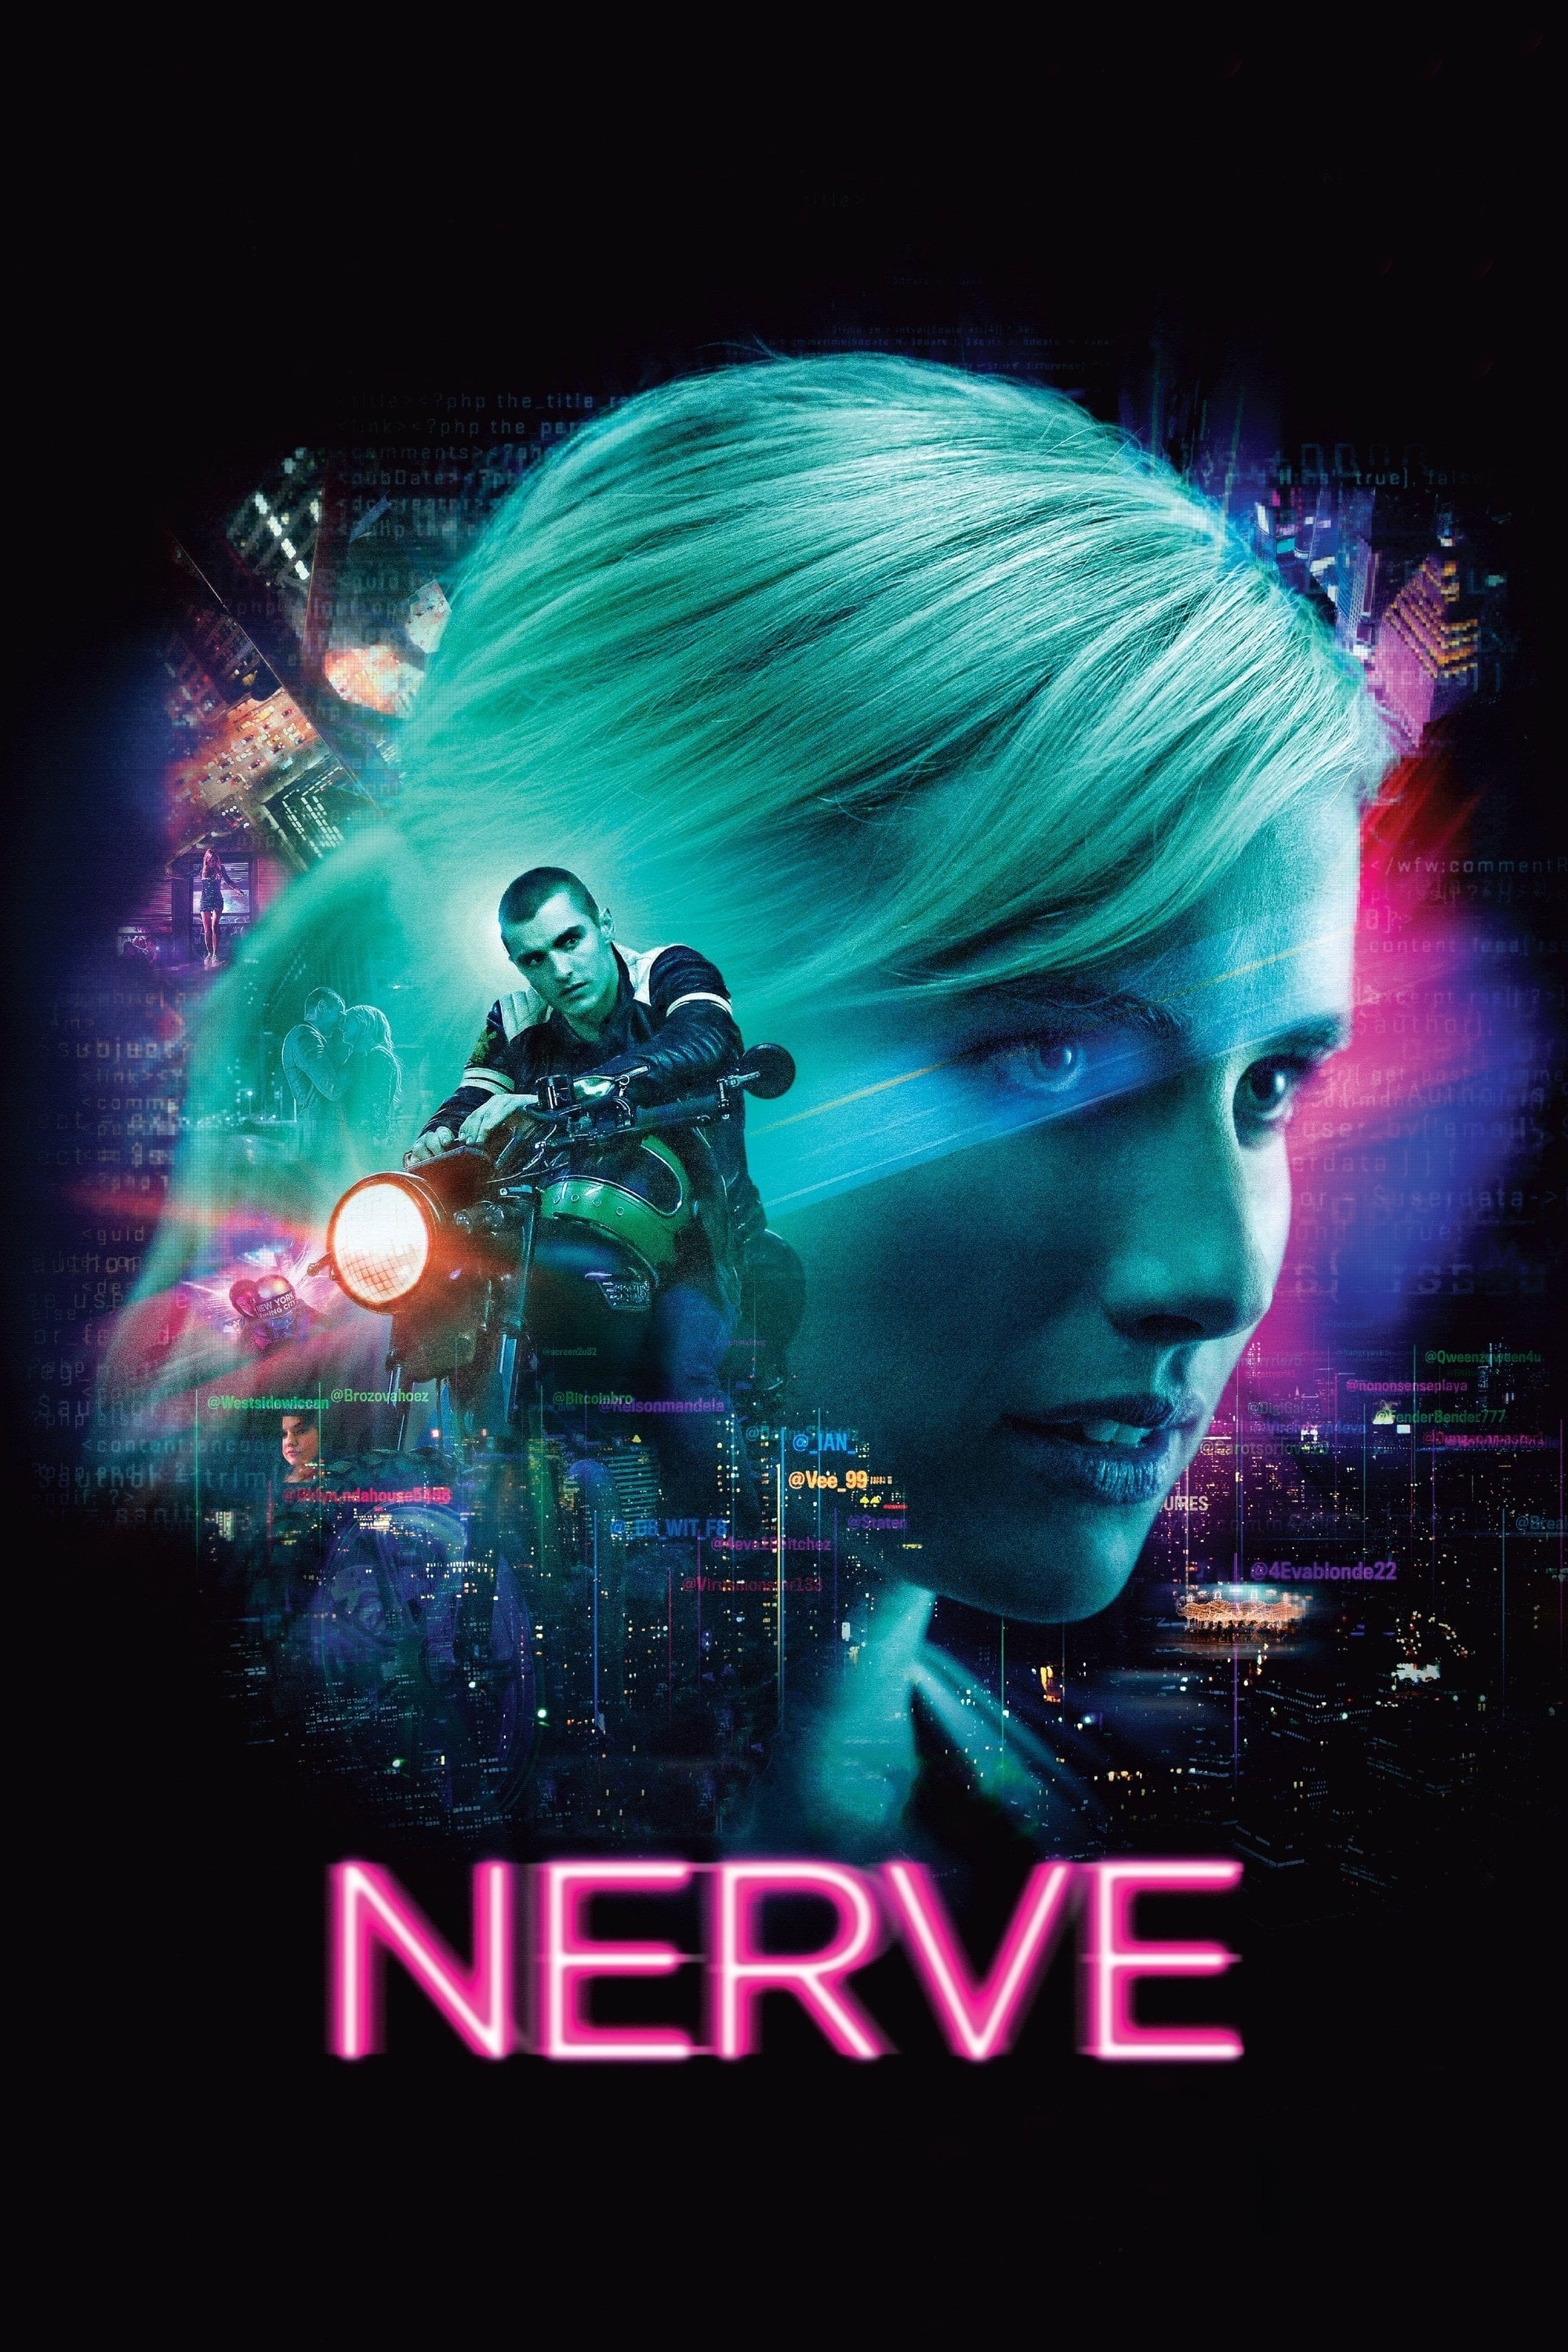 nerve movie review summary